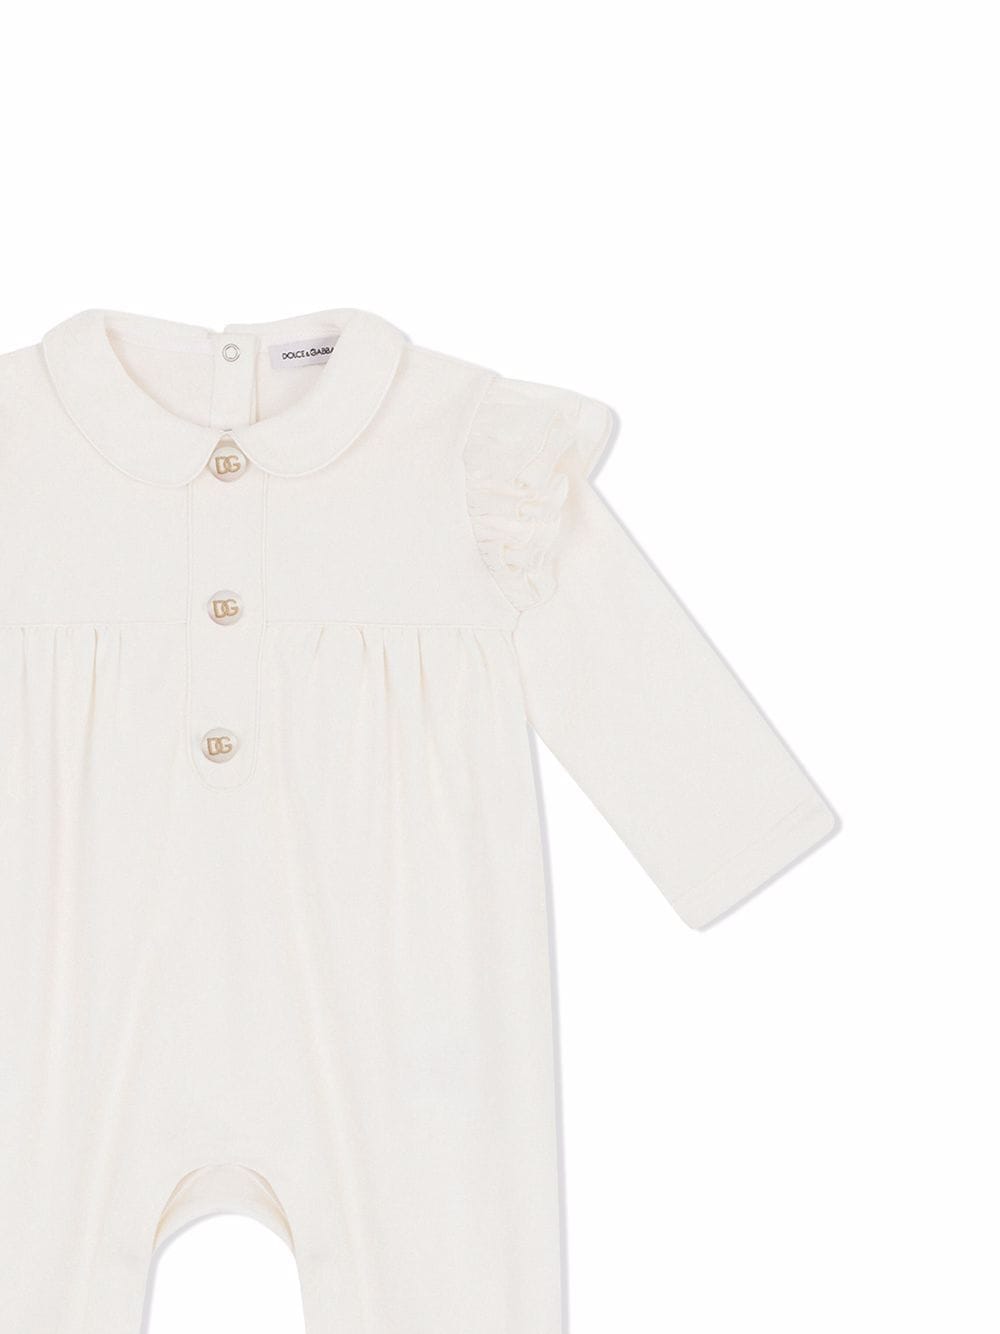 Shop Dolce & Gabbana Interlock Babygrow Set In White